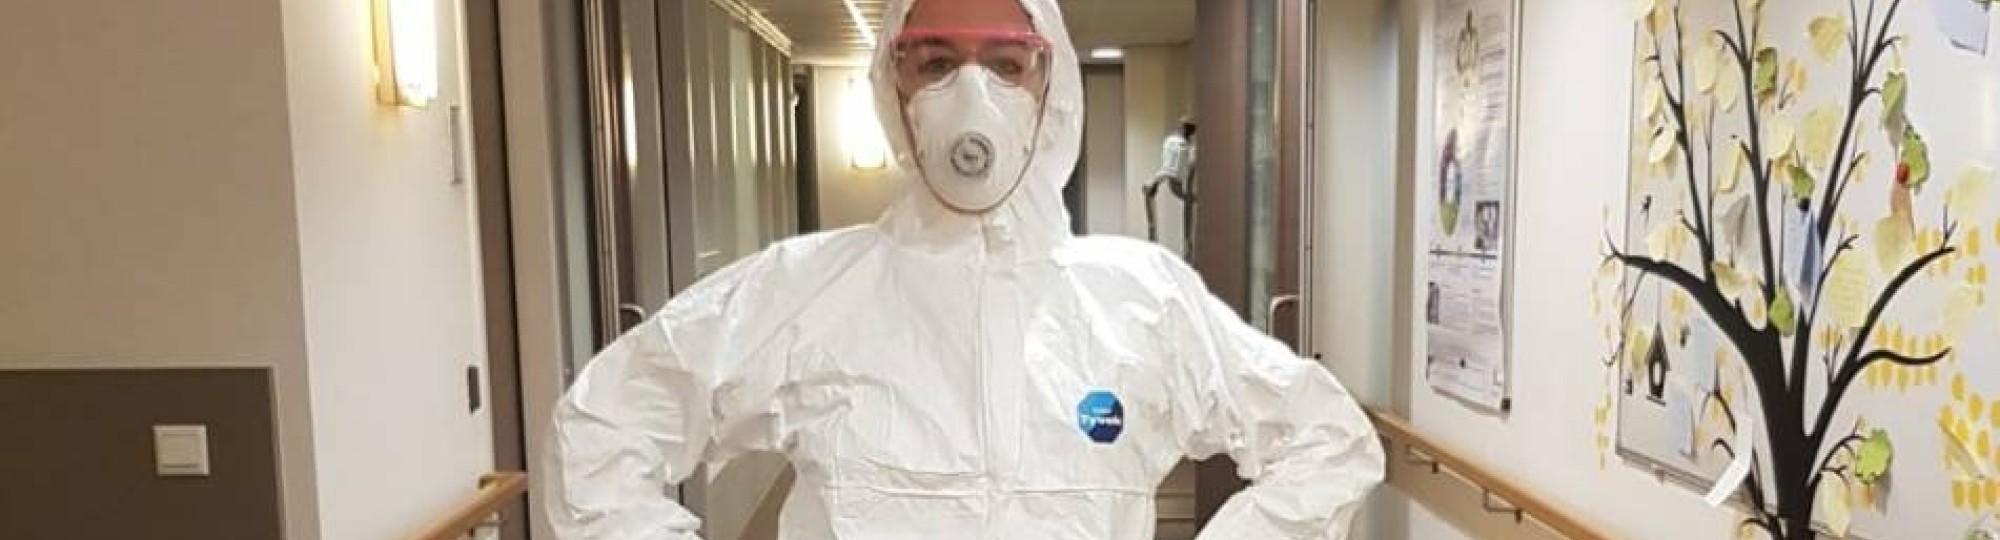 student Verpleegkunde deeltijd Ashley Venrooij in beschermende kleding corona 2020